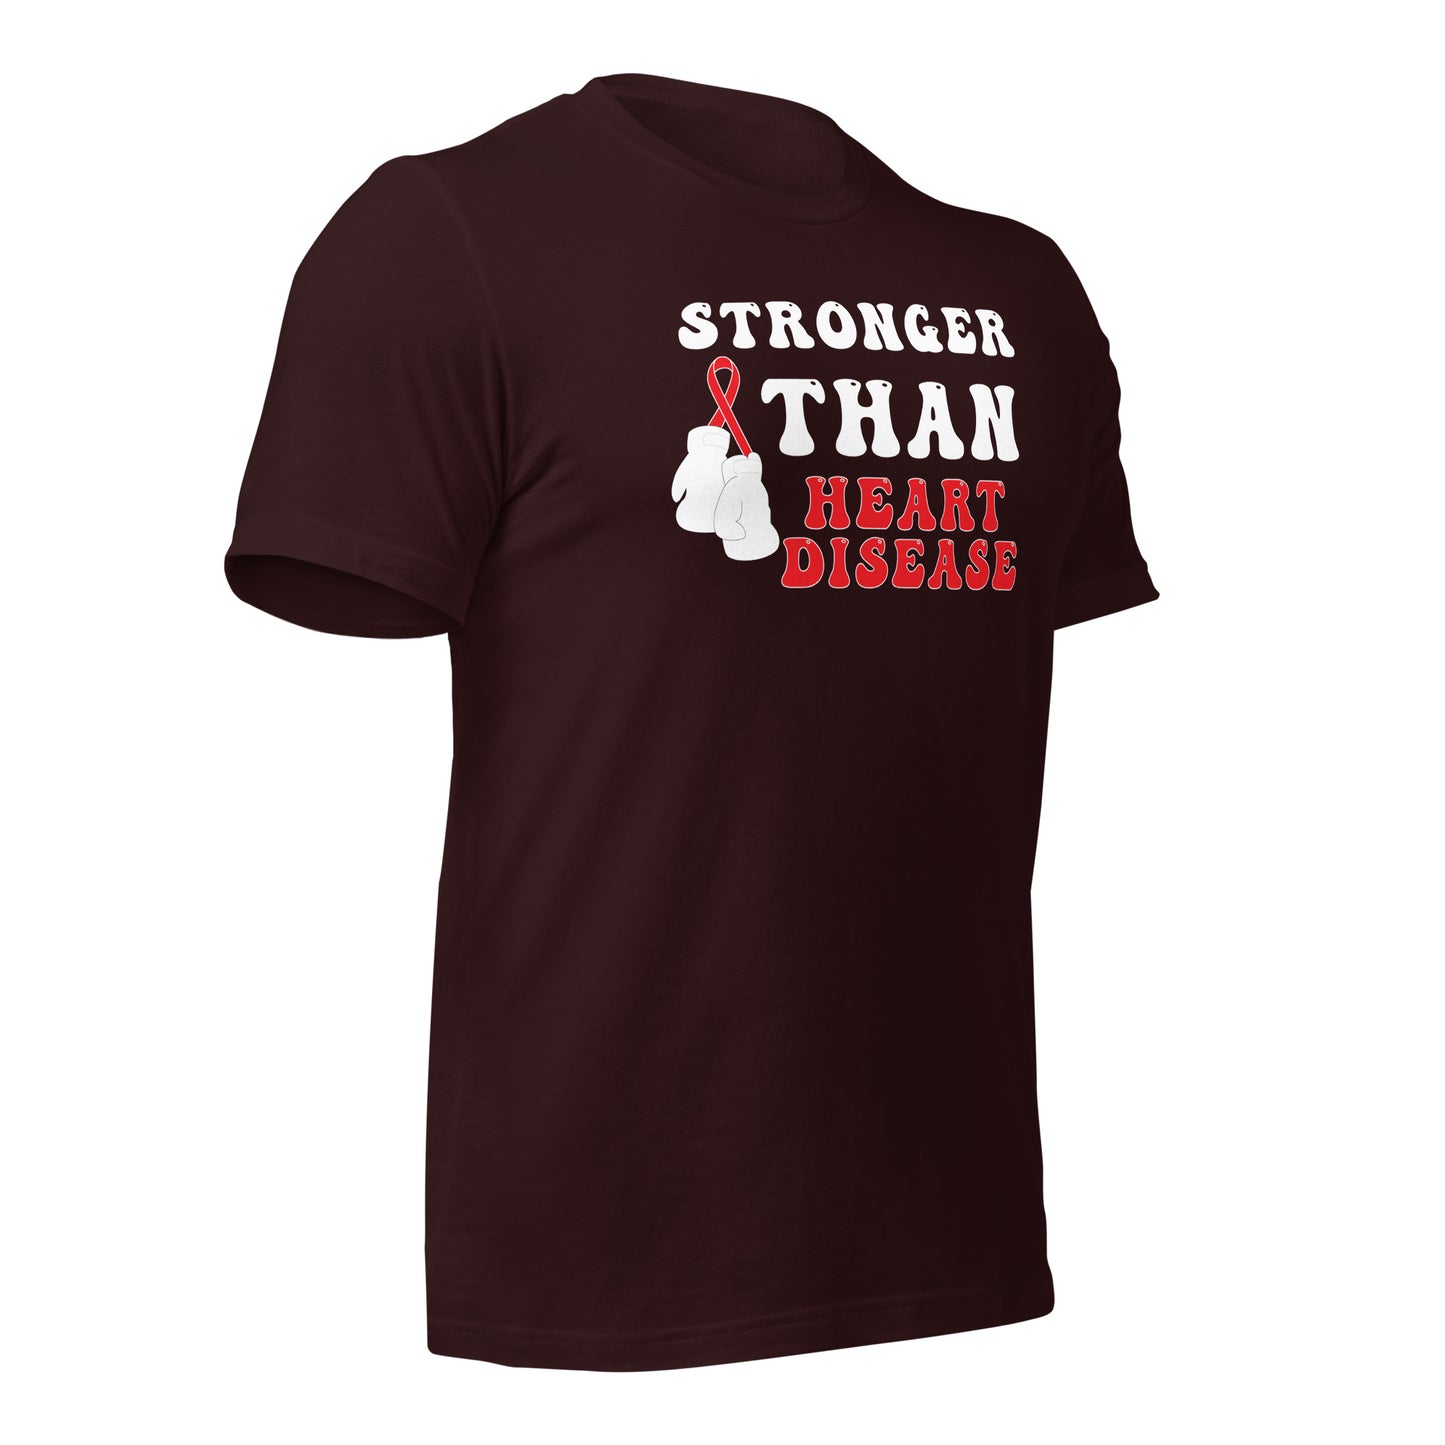 Stronger than Heart Disease Awareness Quality Cotton Bella Canvas Adult T-Shirt